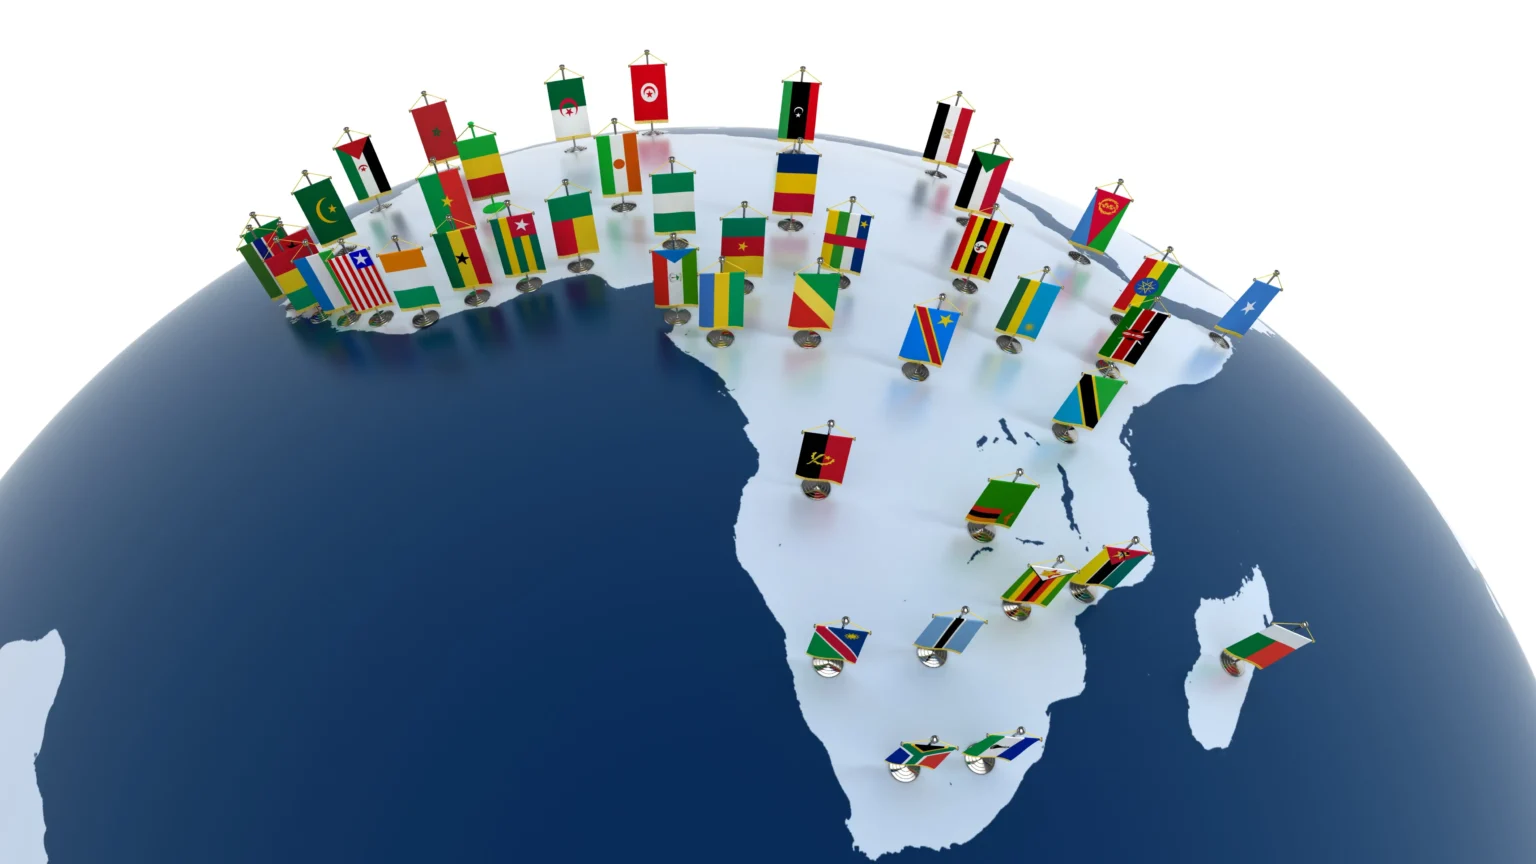 Africa's economic growth